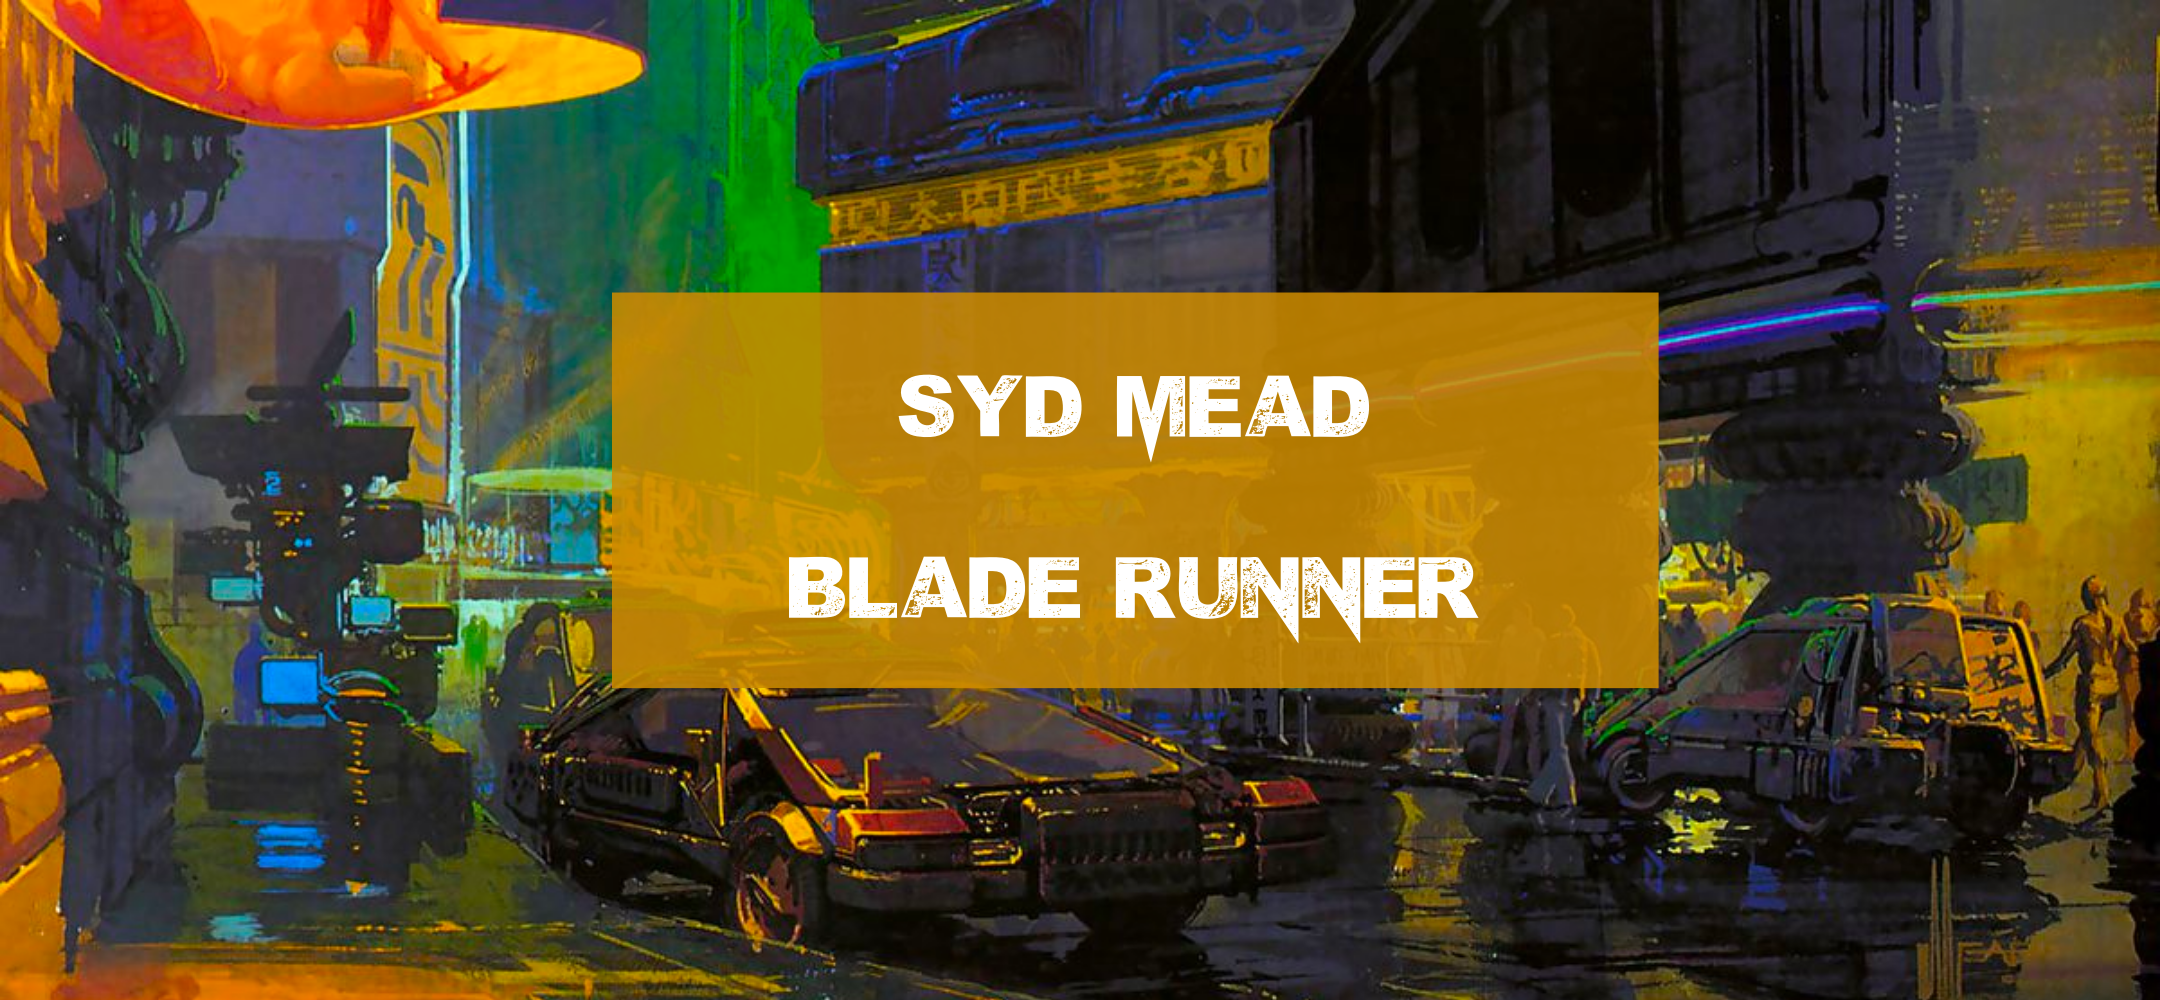 Syd Mead cyberpunk artwork of blade runner